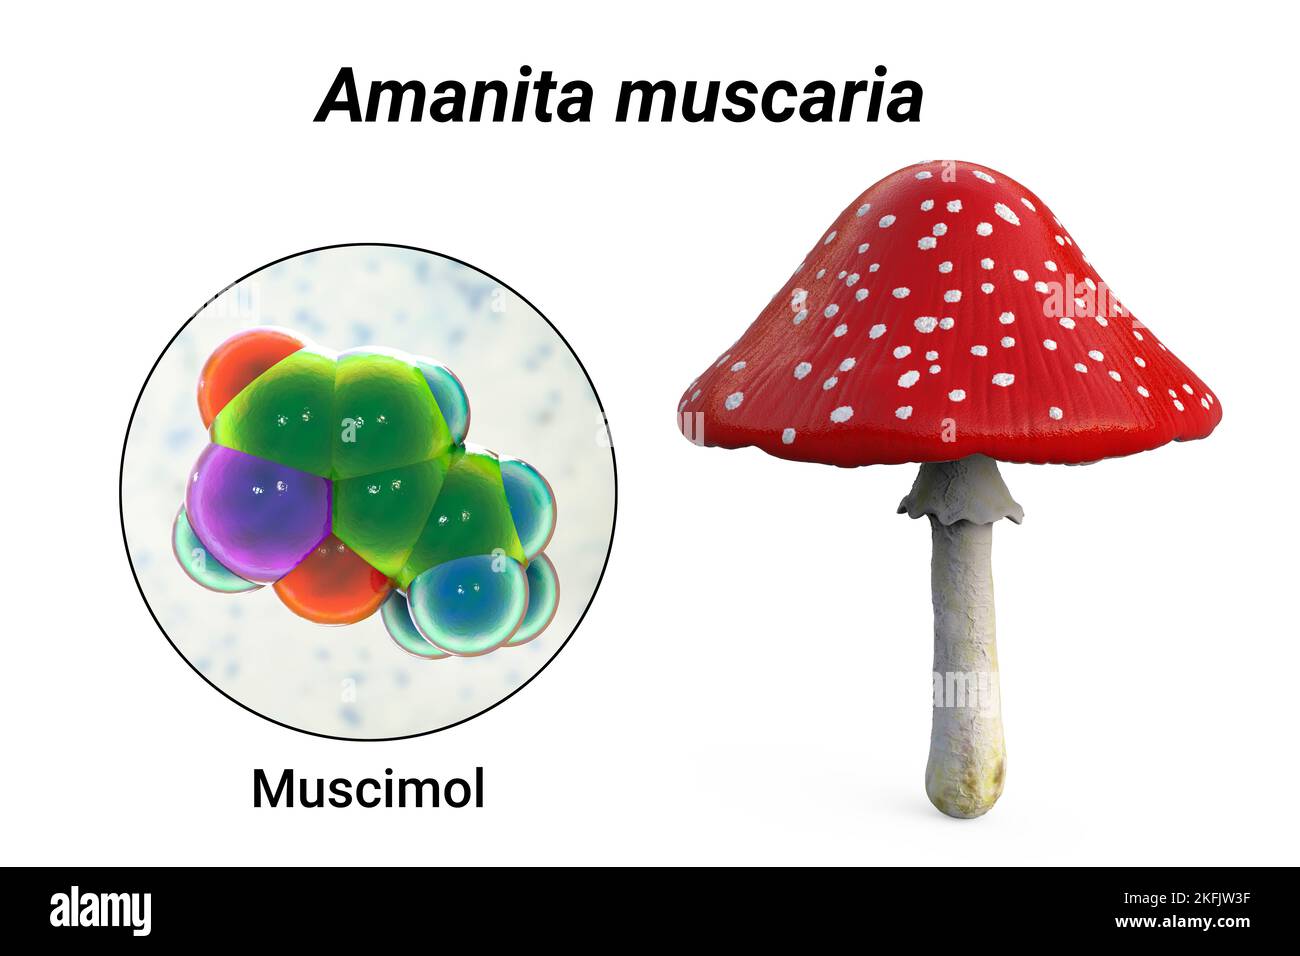 Fly agaric mushroom and muscimol toxin, illustration Stock Photo